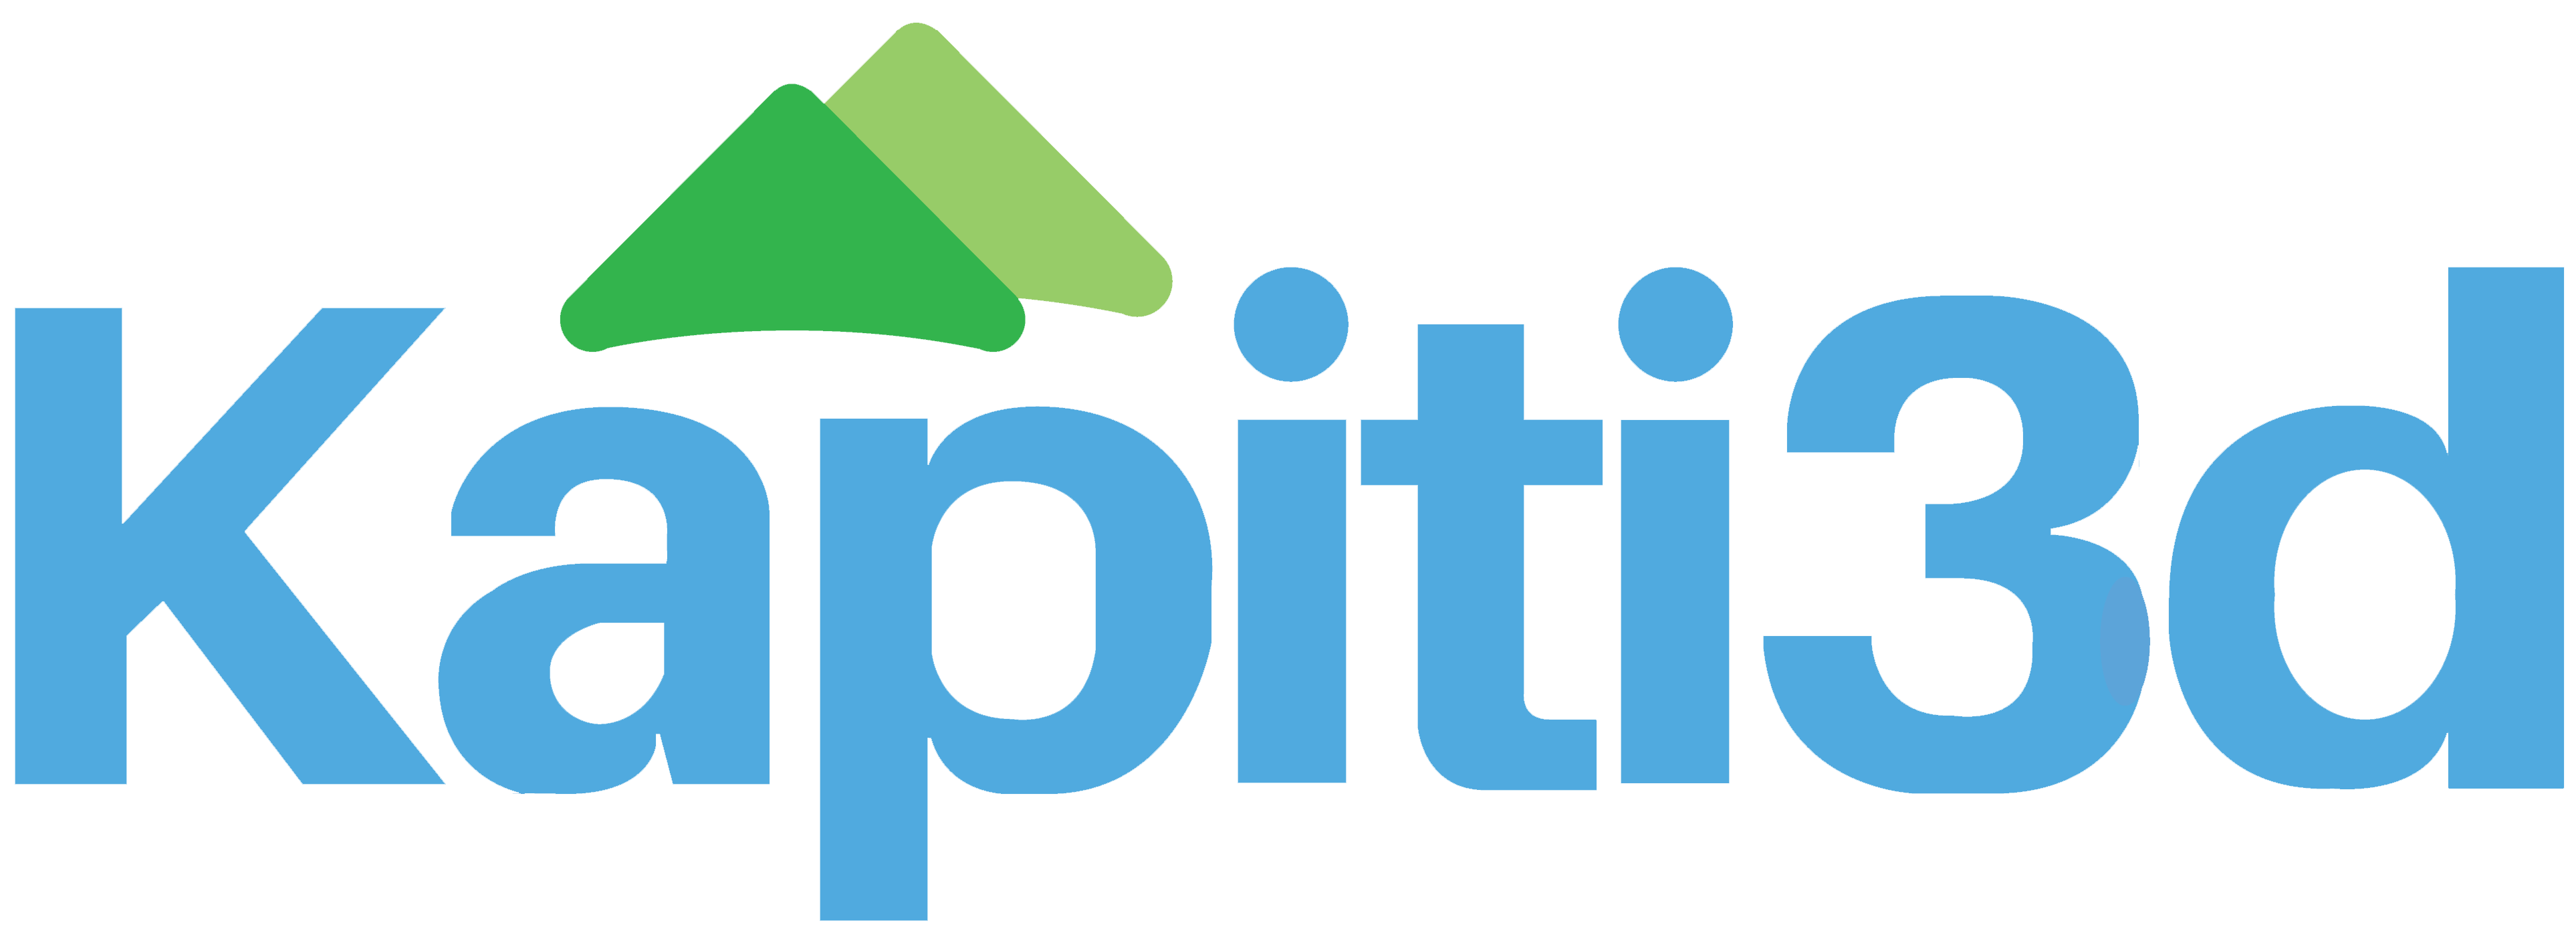 Kapiti3d logo